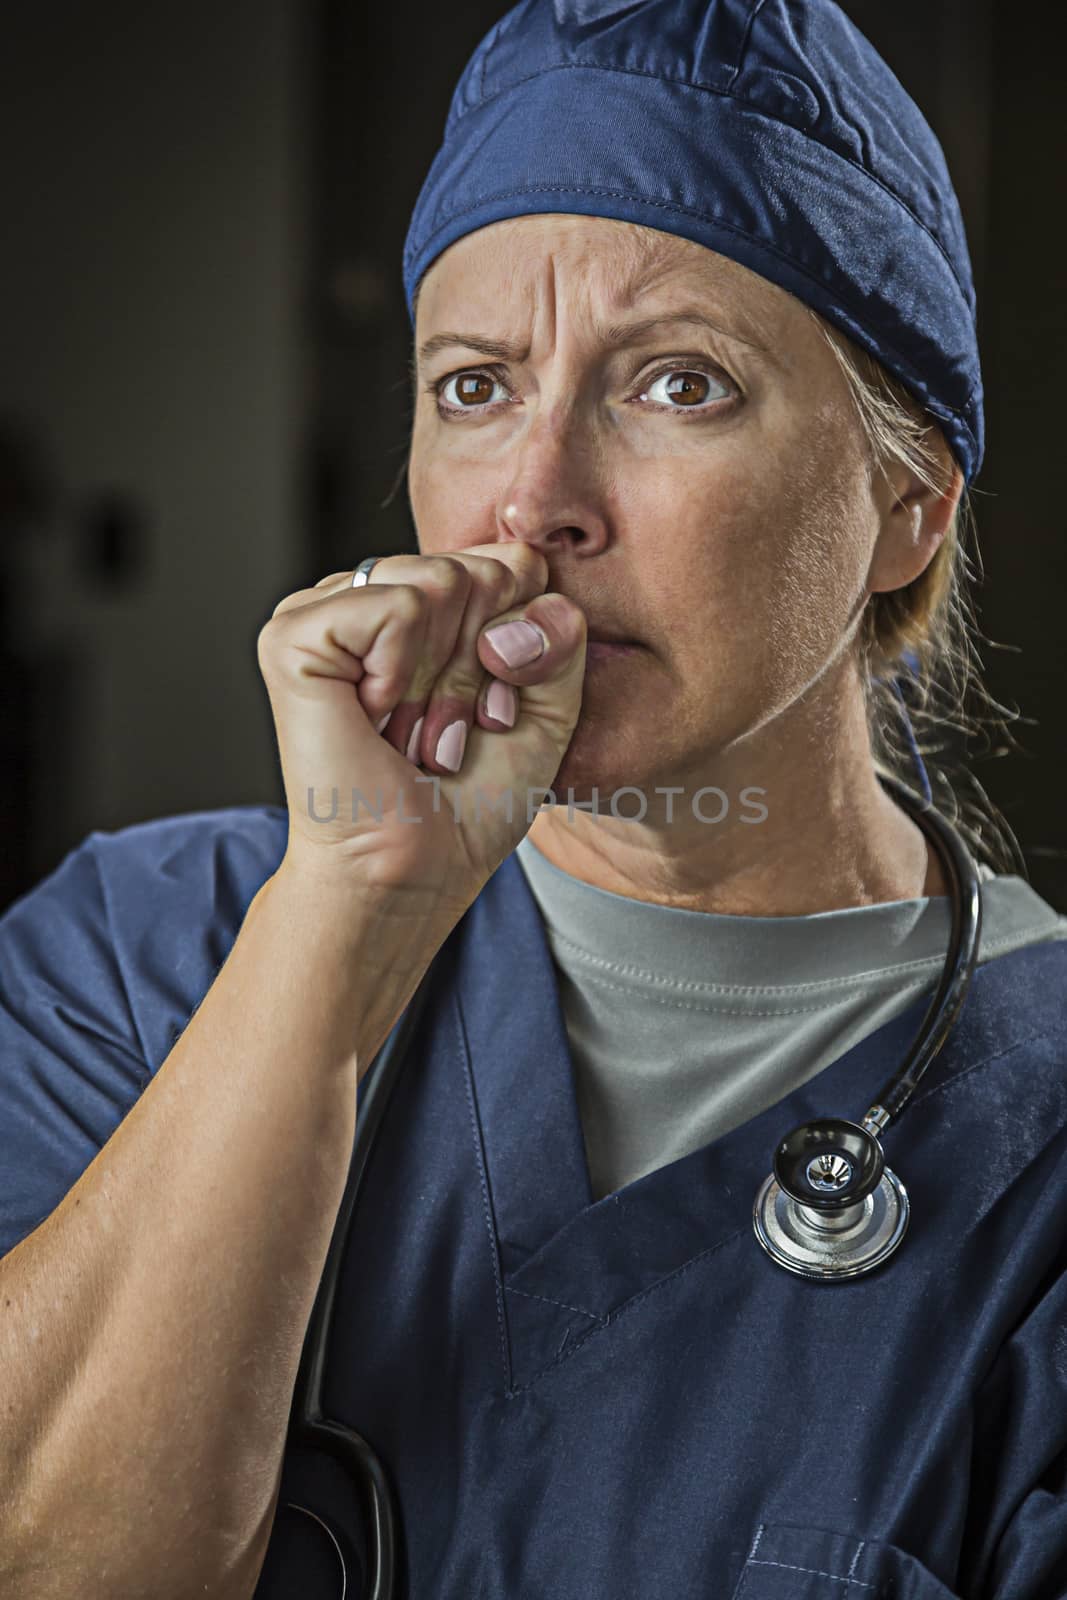 Very Concerned Looking Female Doctor or Nurse.